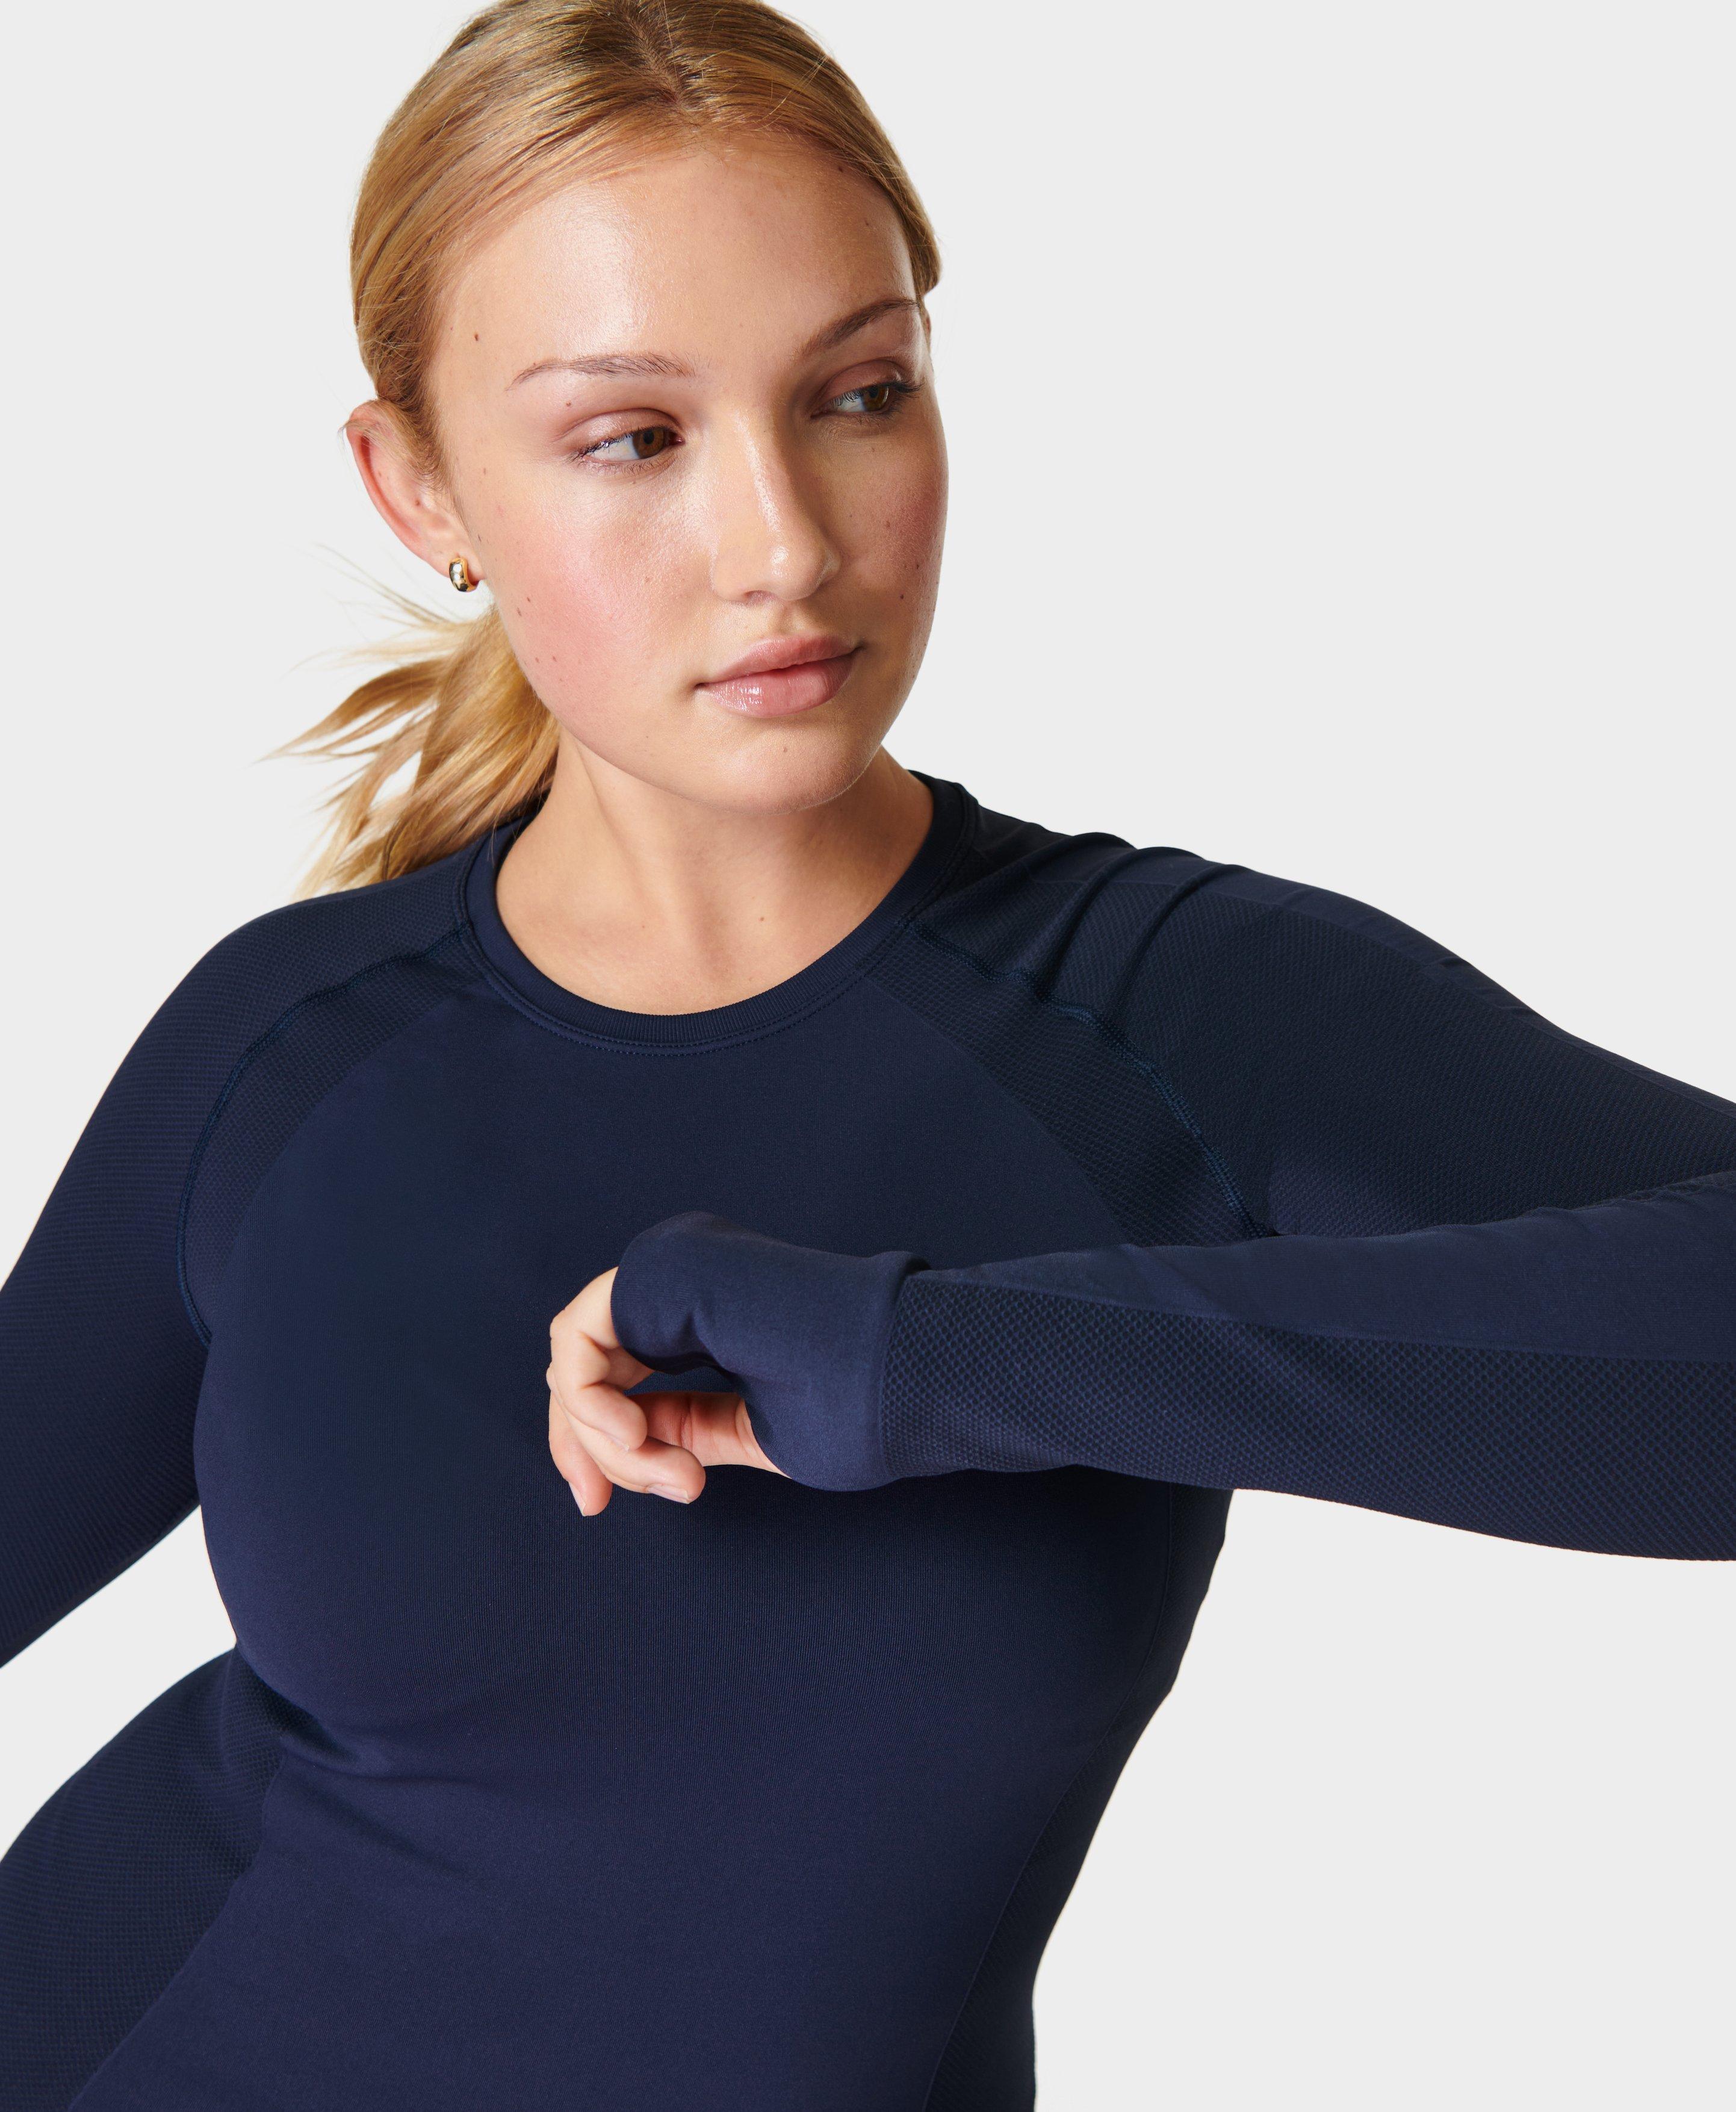 Women's Long Sleeve Gym Tops & T-shirts